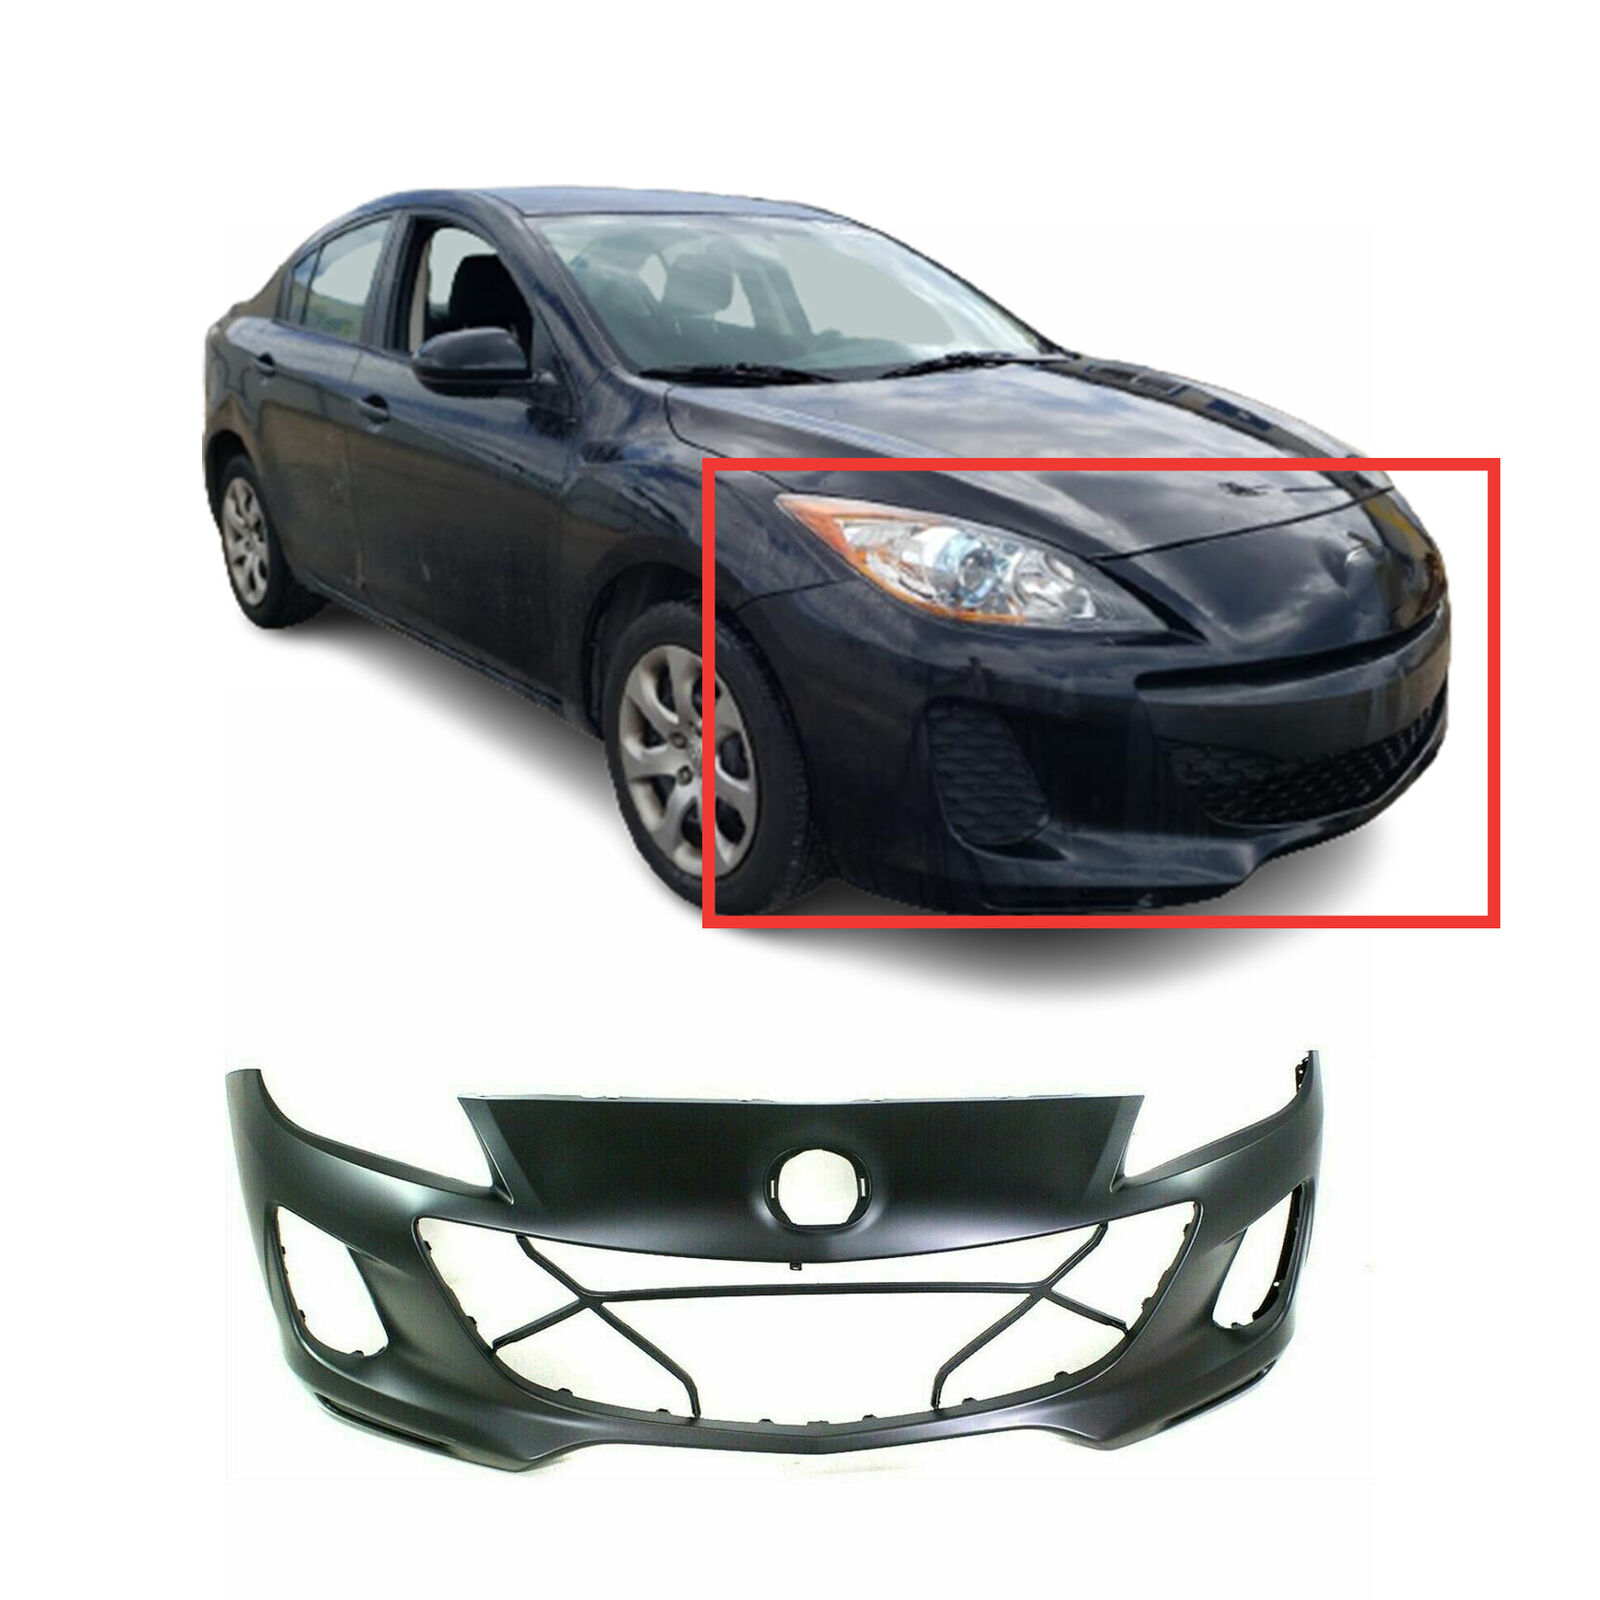 Front Bumper Cover For 2012-2013 Mazda 3 w/ fog light holes